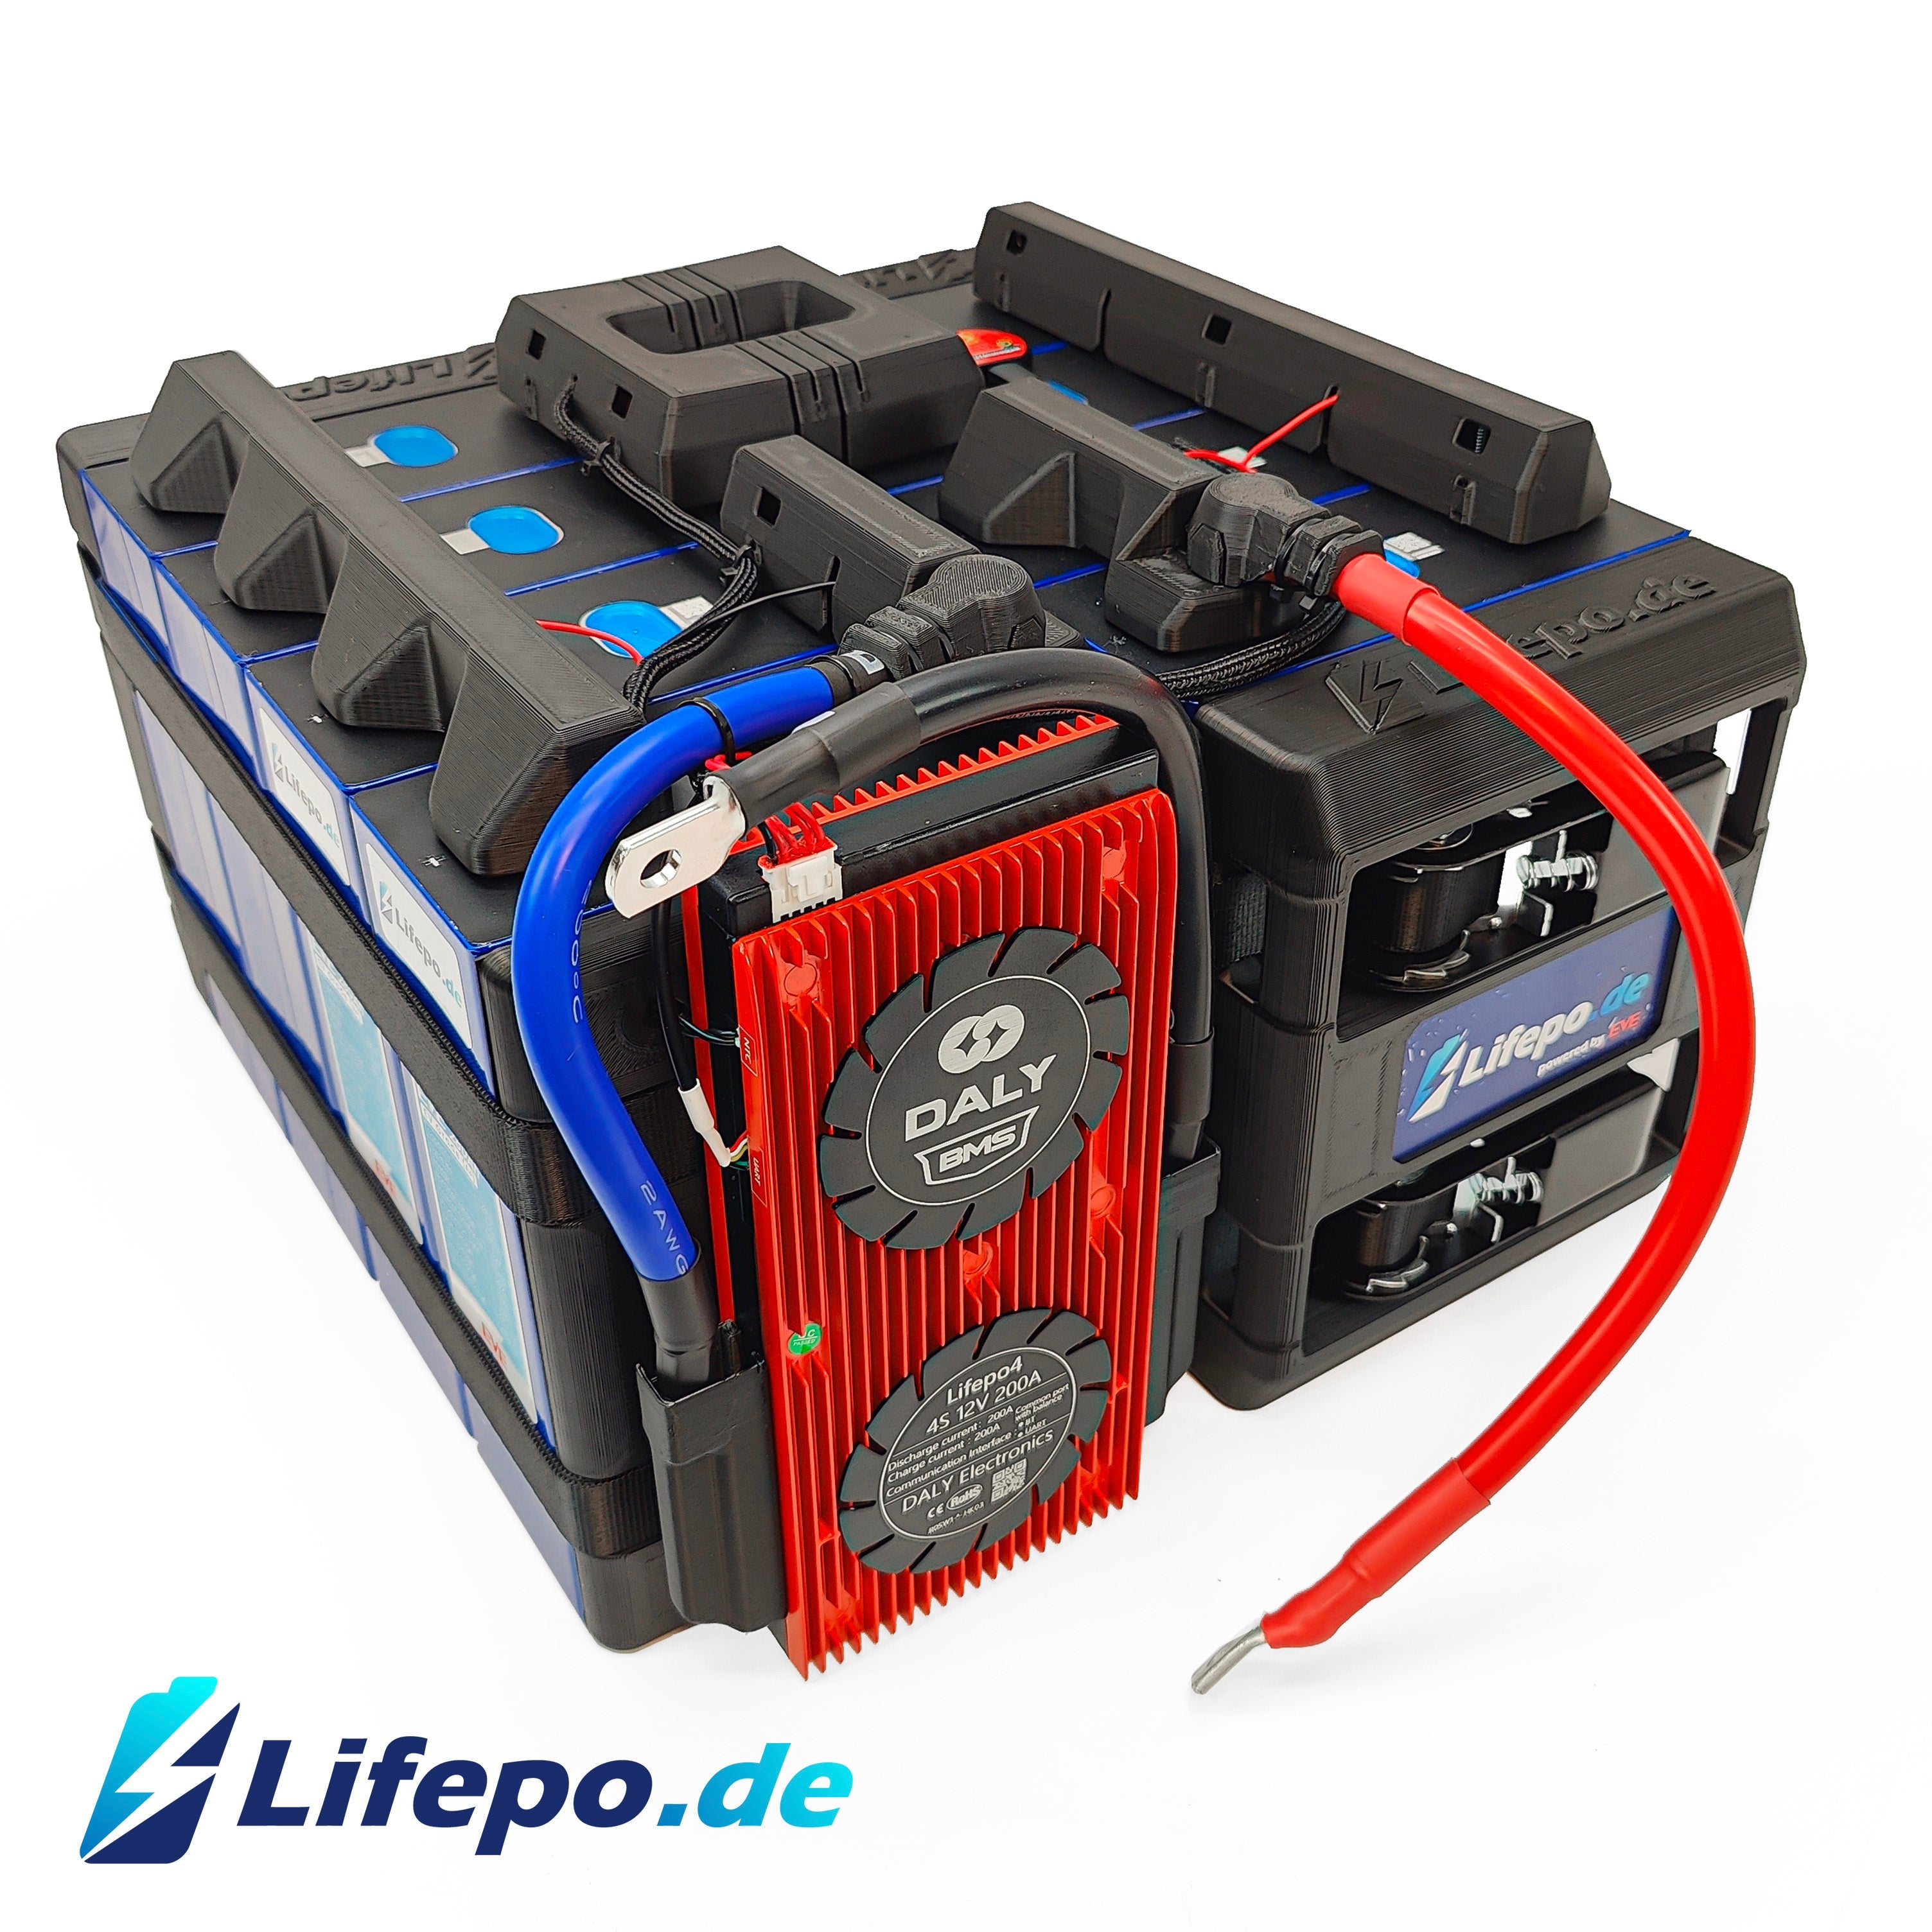 0% MwSt 12v 560Ah Lifepo4 Batteriesystem mit EVE Grade A+ 8kWh zweireihig